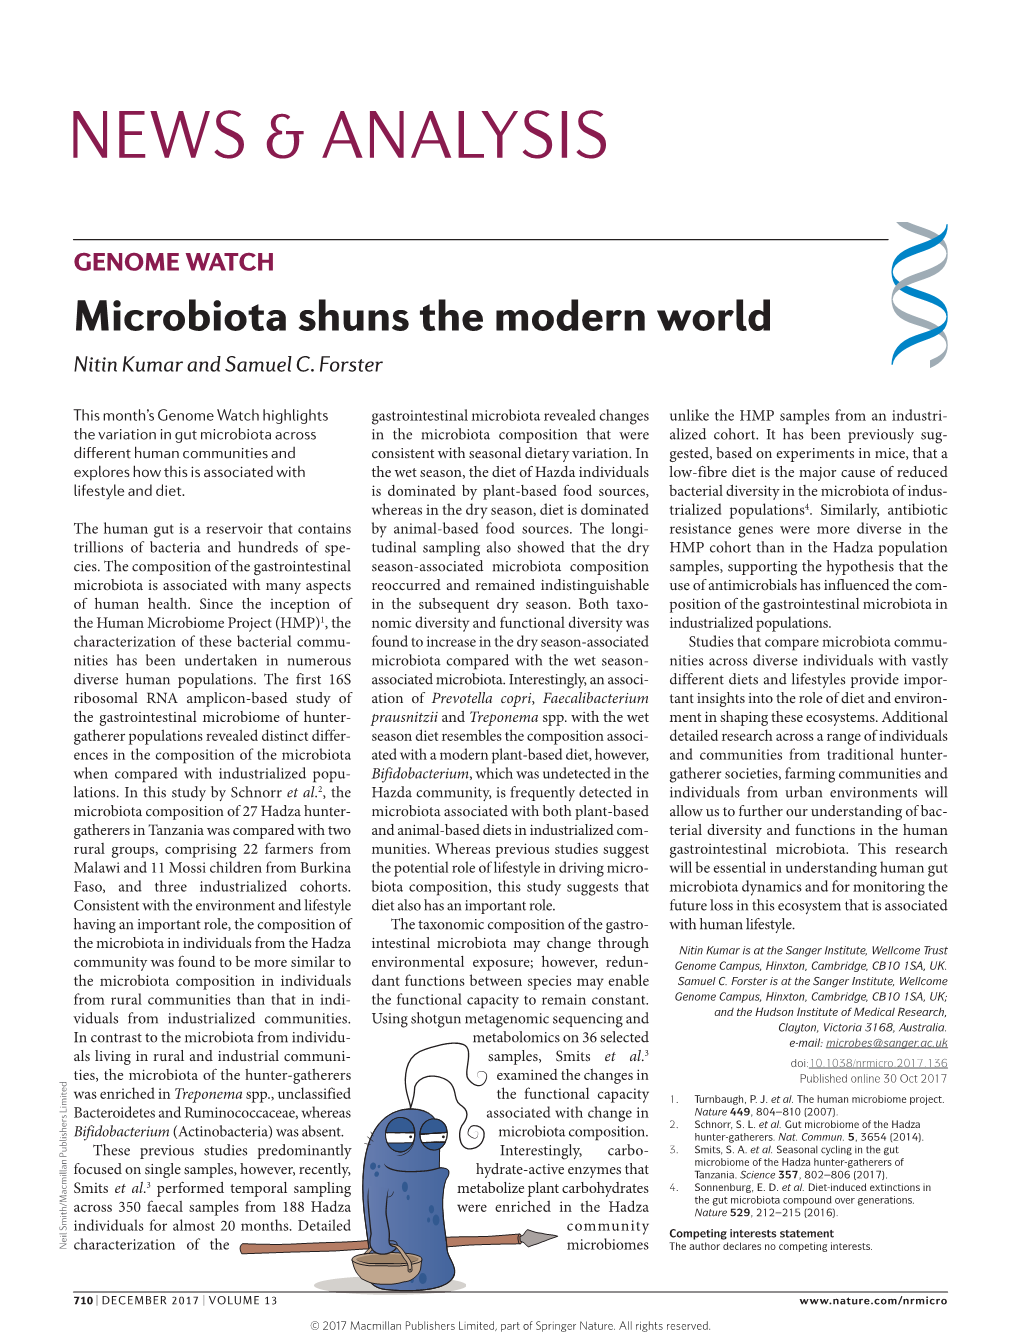 Microbiota Shuns the Modern World